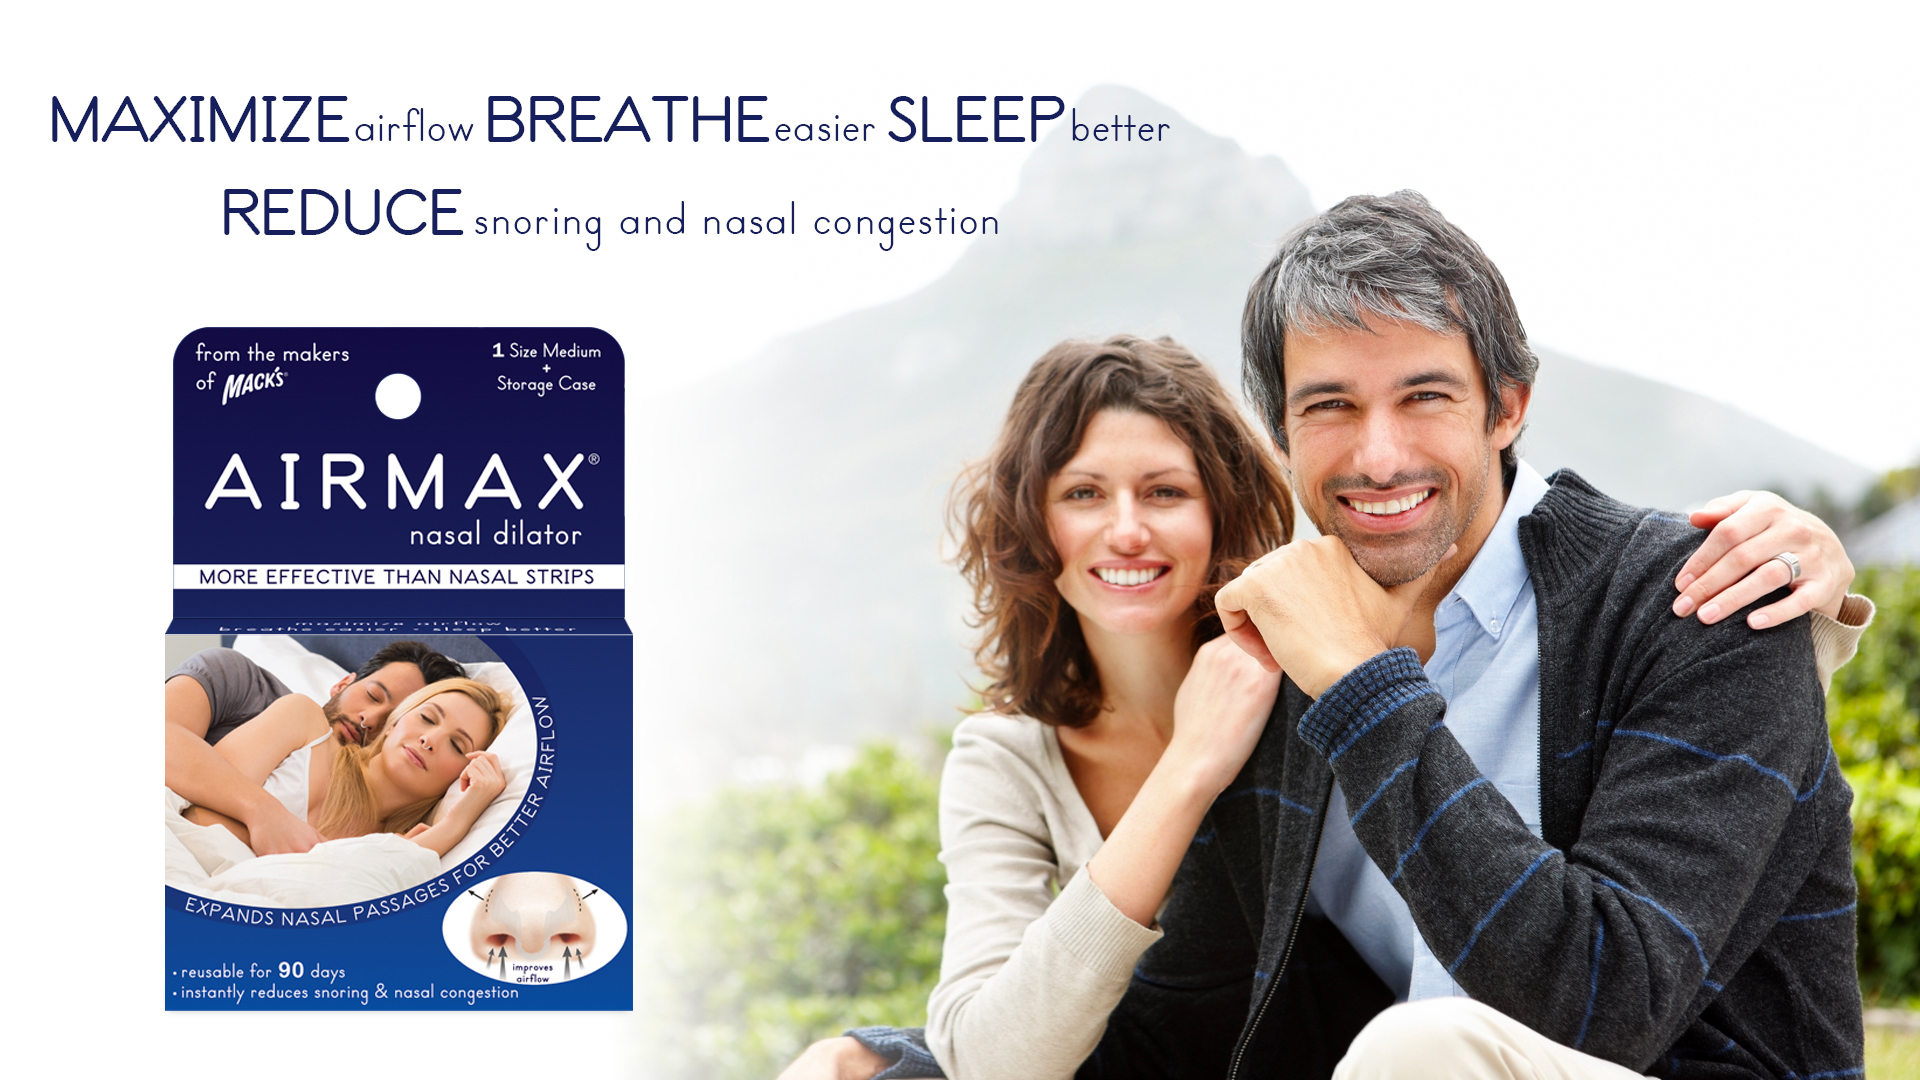 AIRMAX Nasal Dilator for breathing sleeping and daytime